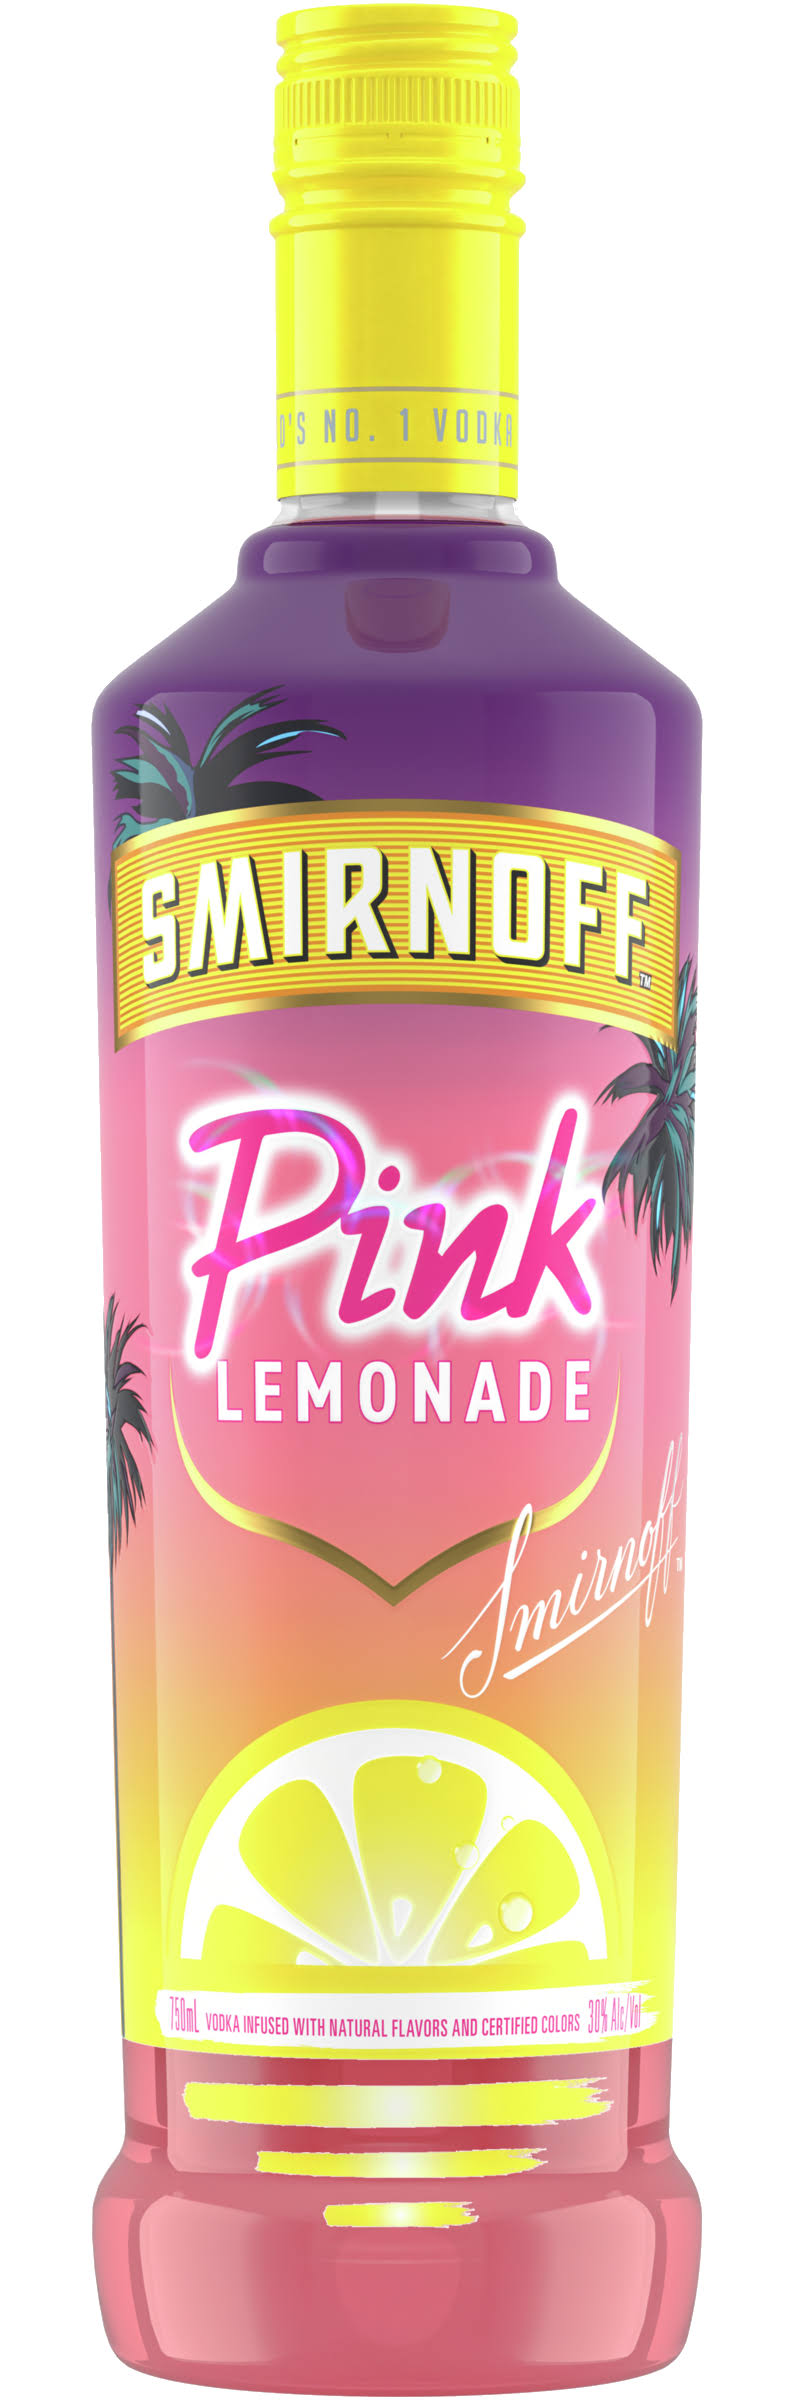 Smirnoff Vodka, Pink Lemonade - 750 ml